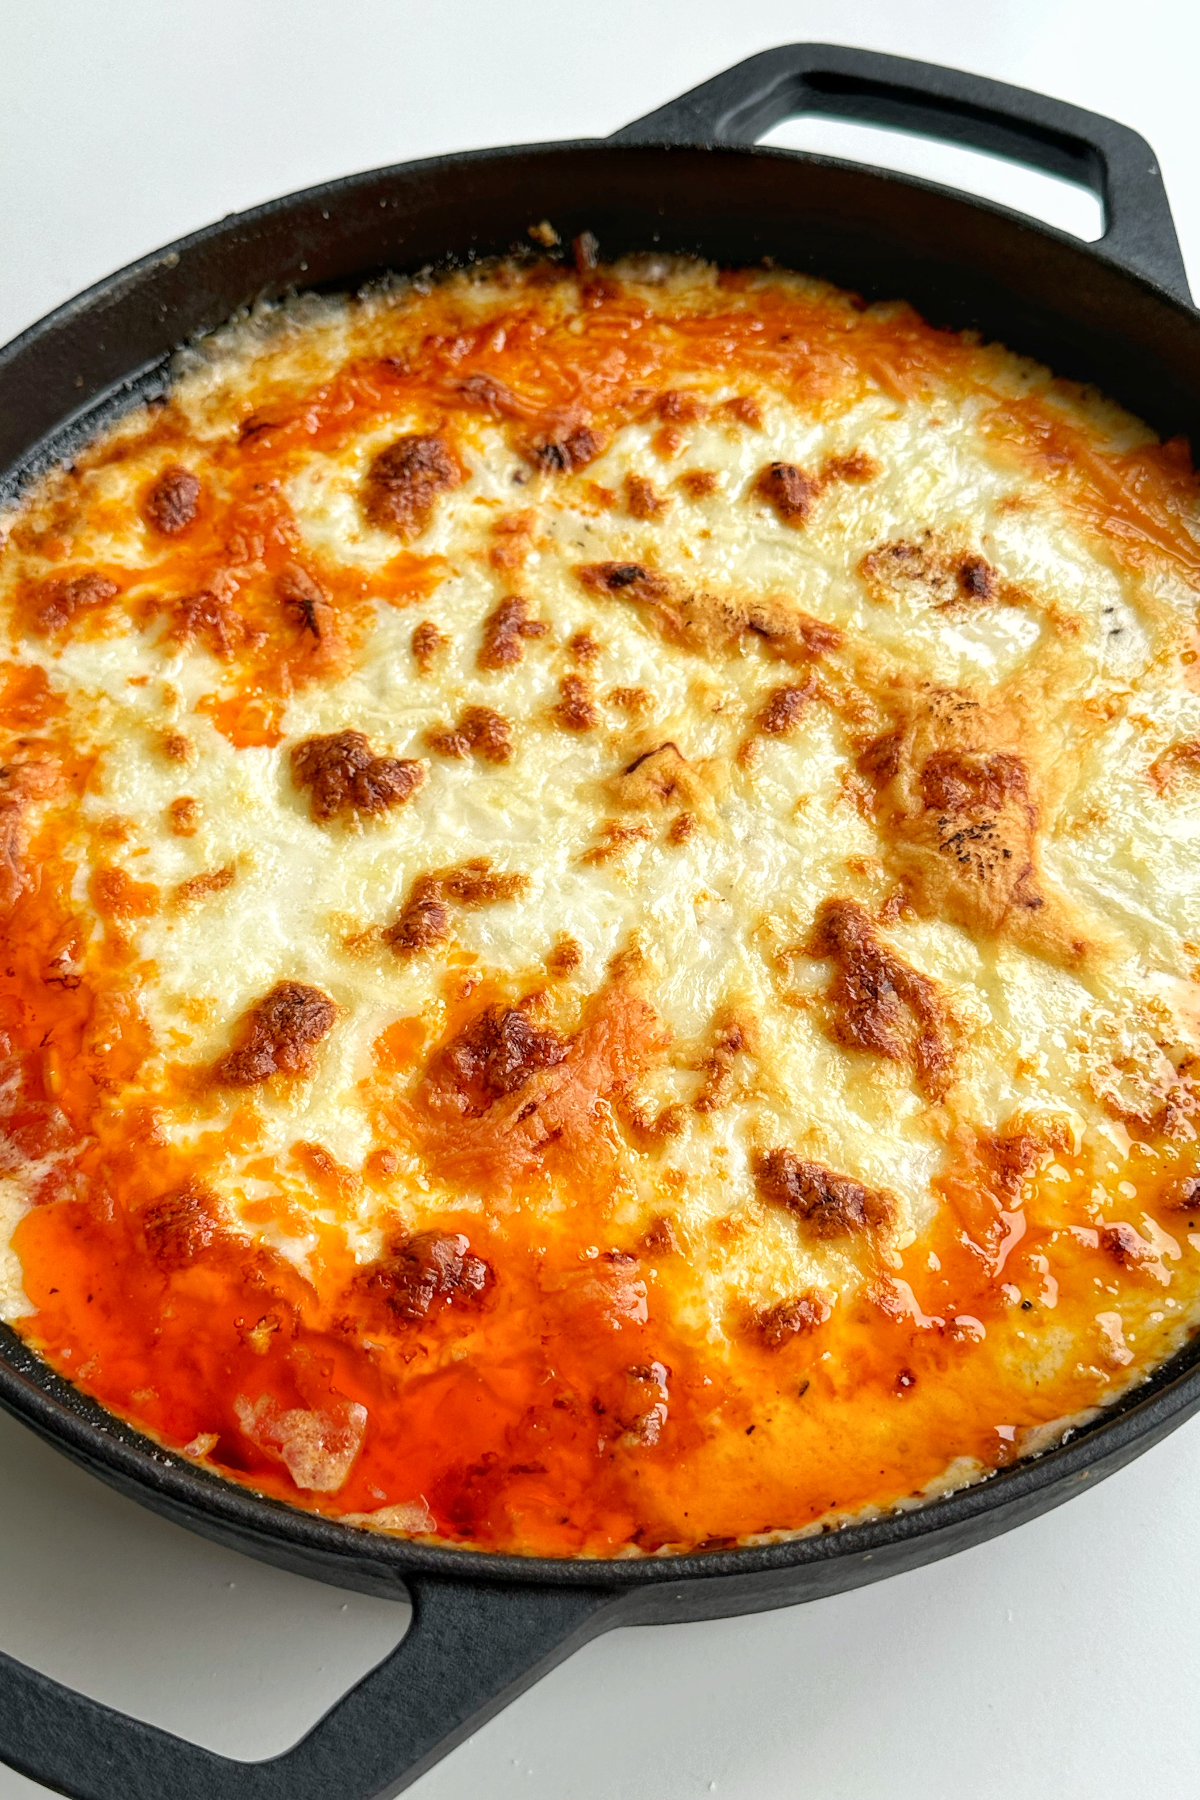 Black casserole dish filled with gnocchi gochujang lasagne.